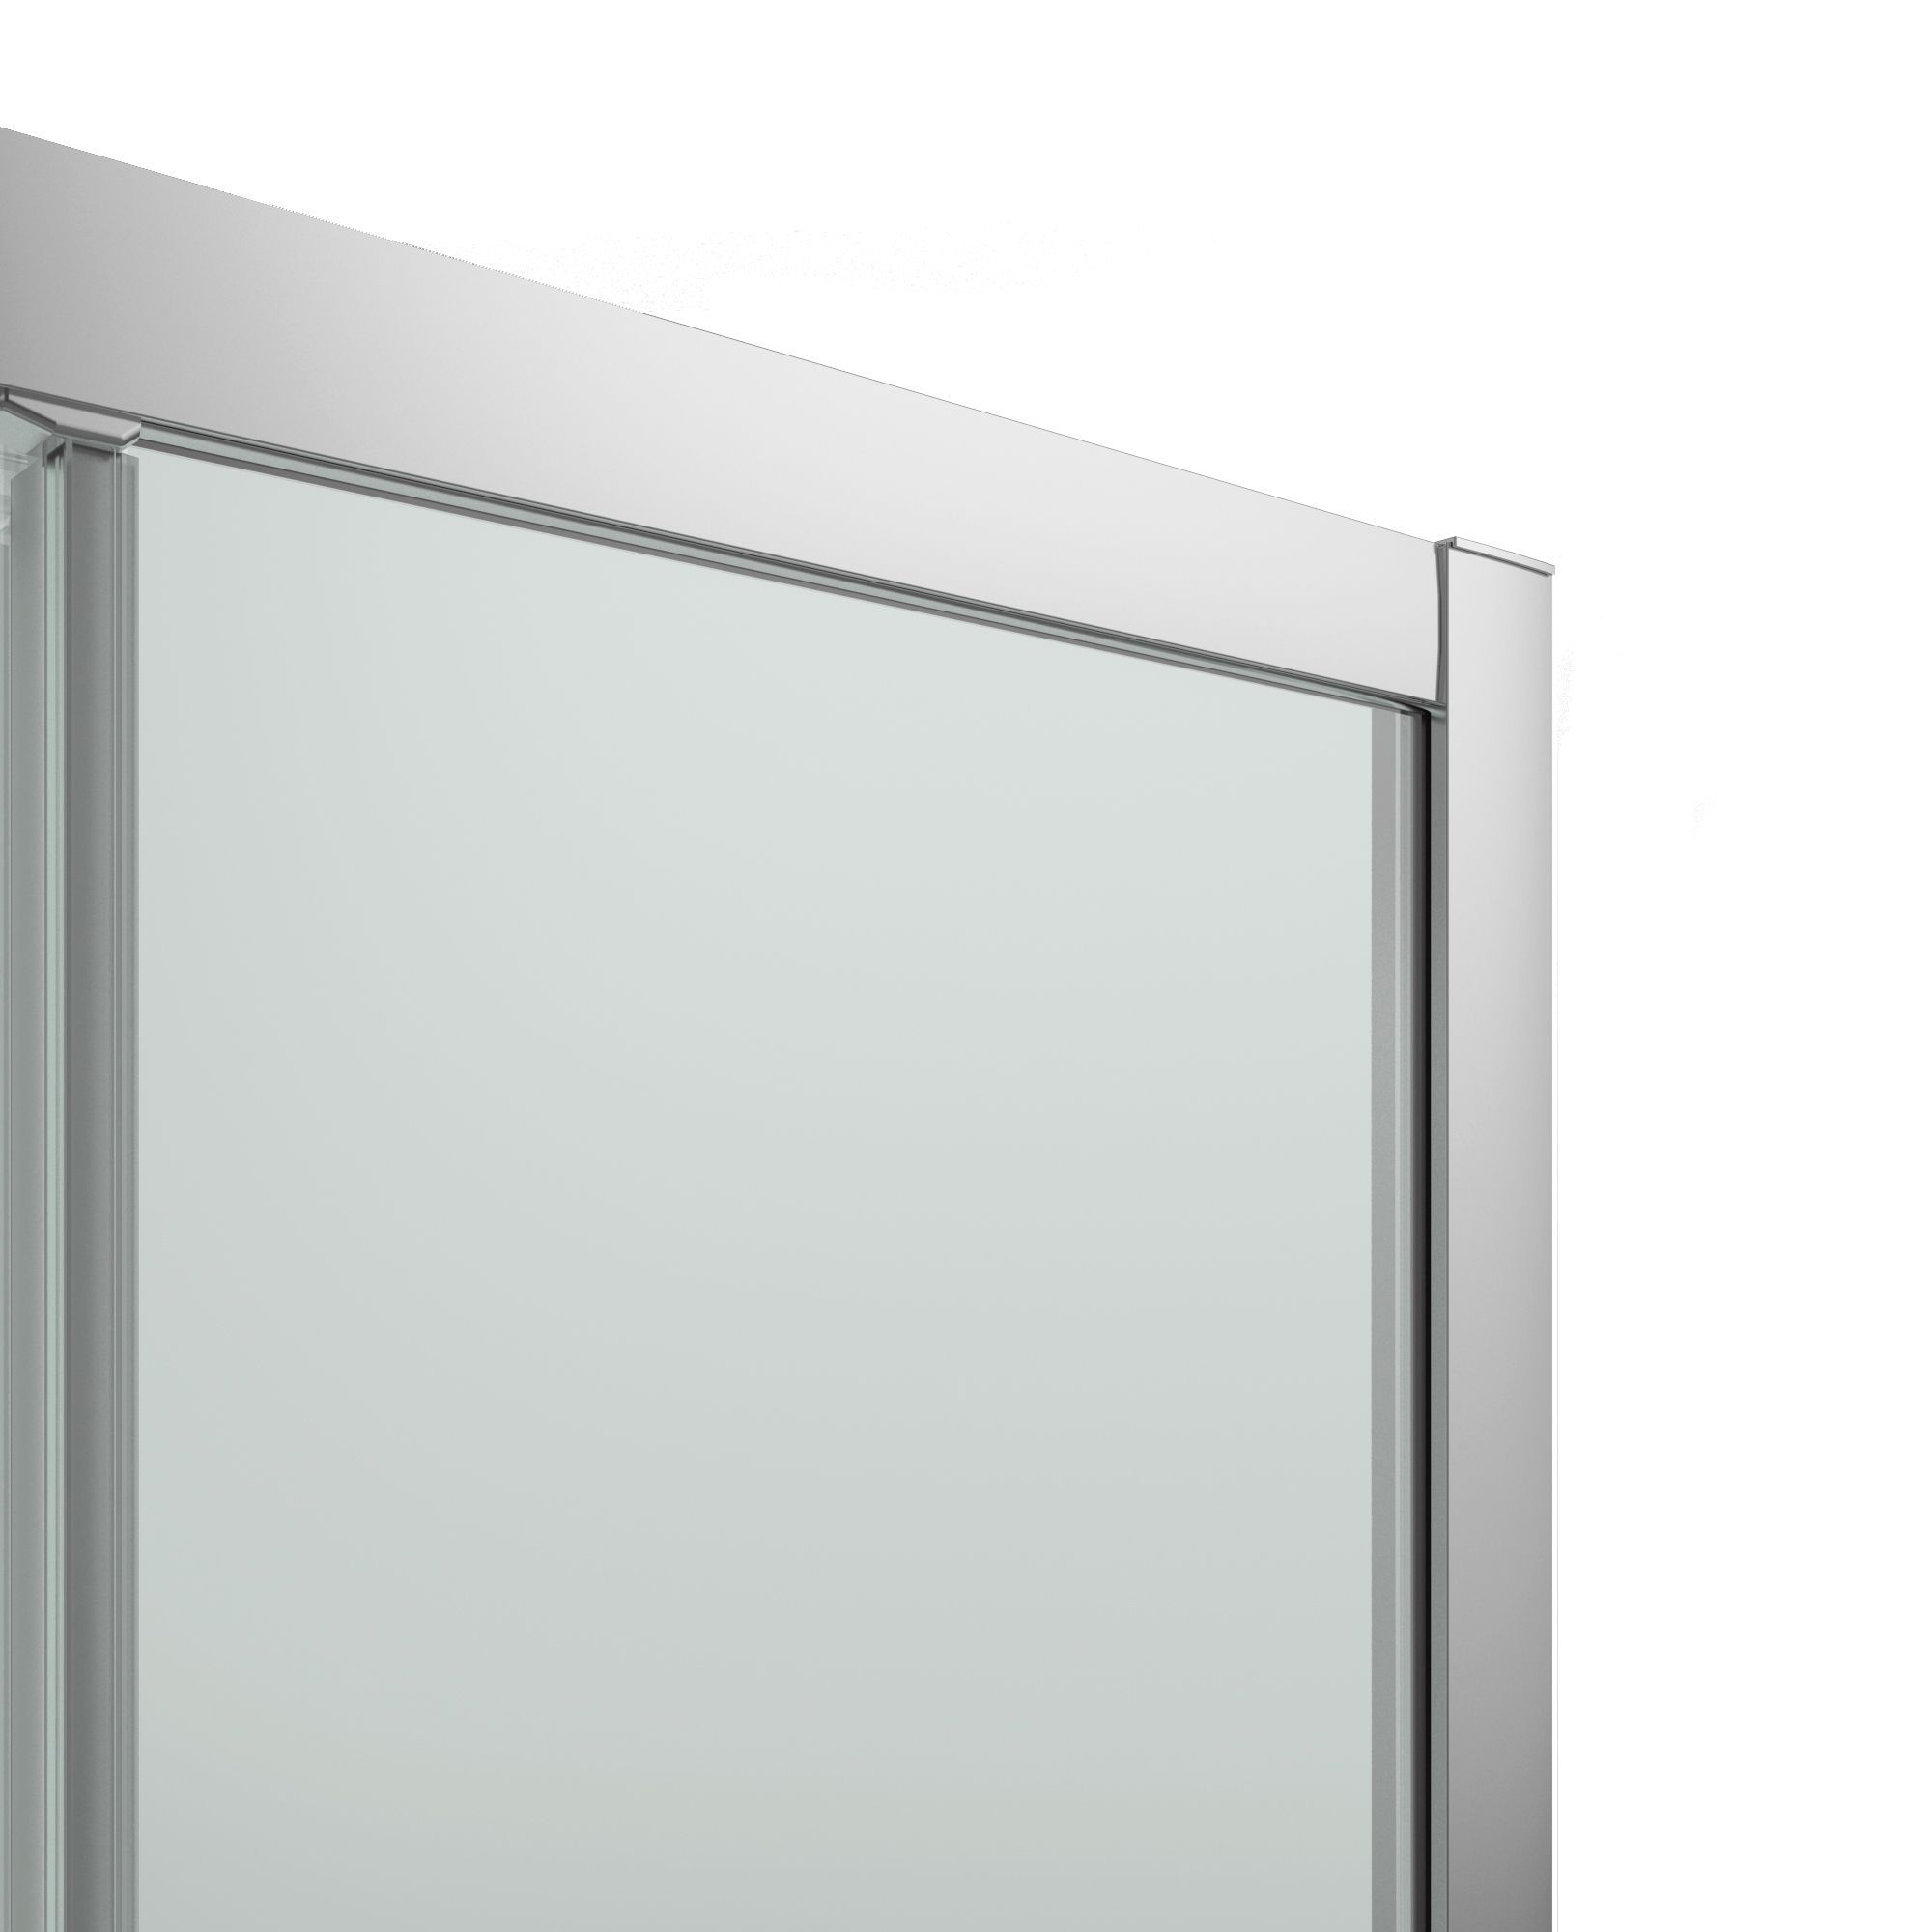 GoodHome Beloya Framed Transparent Silver effect Quadrant Shower enclosure - Corner entry double sliding door (W)80cm (D)80cm